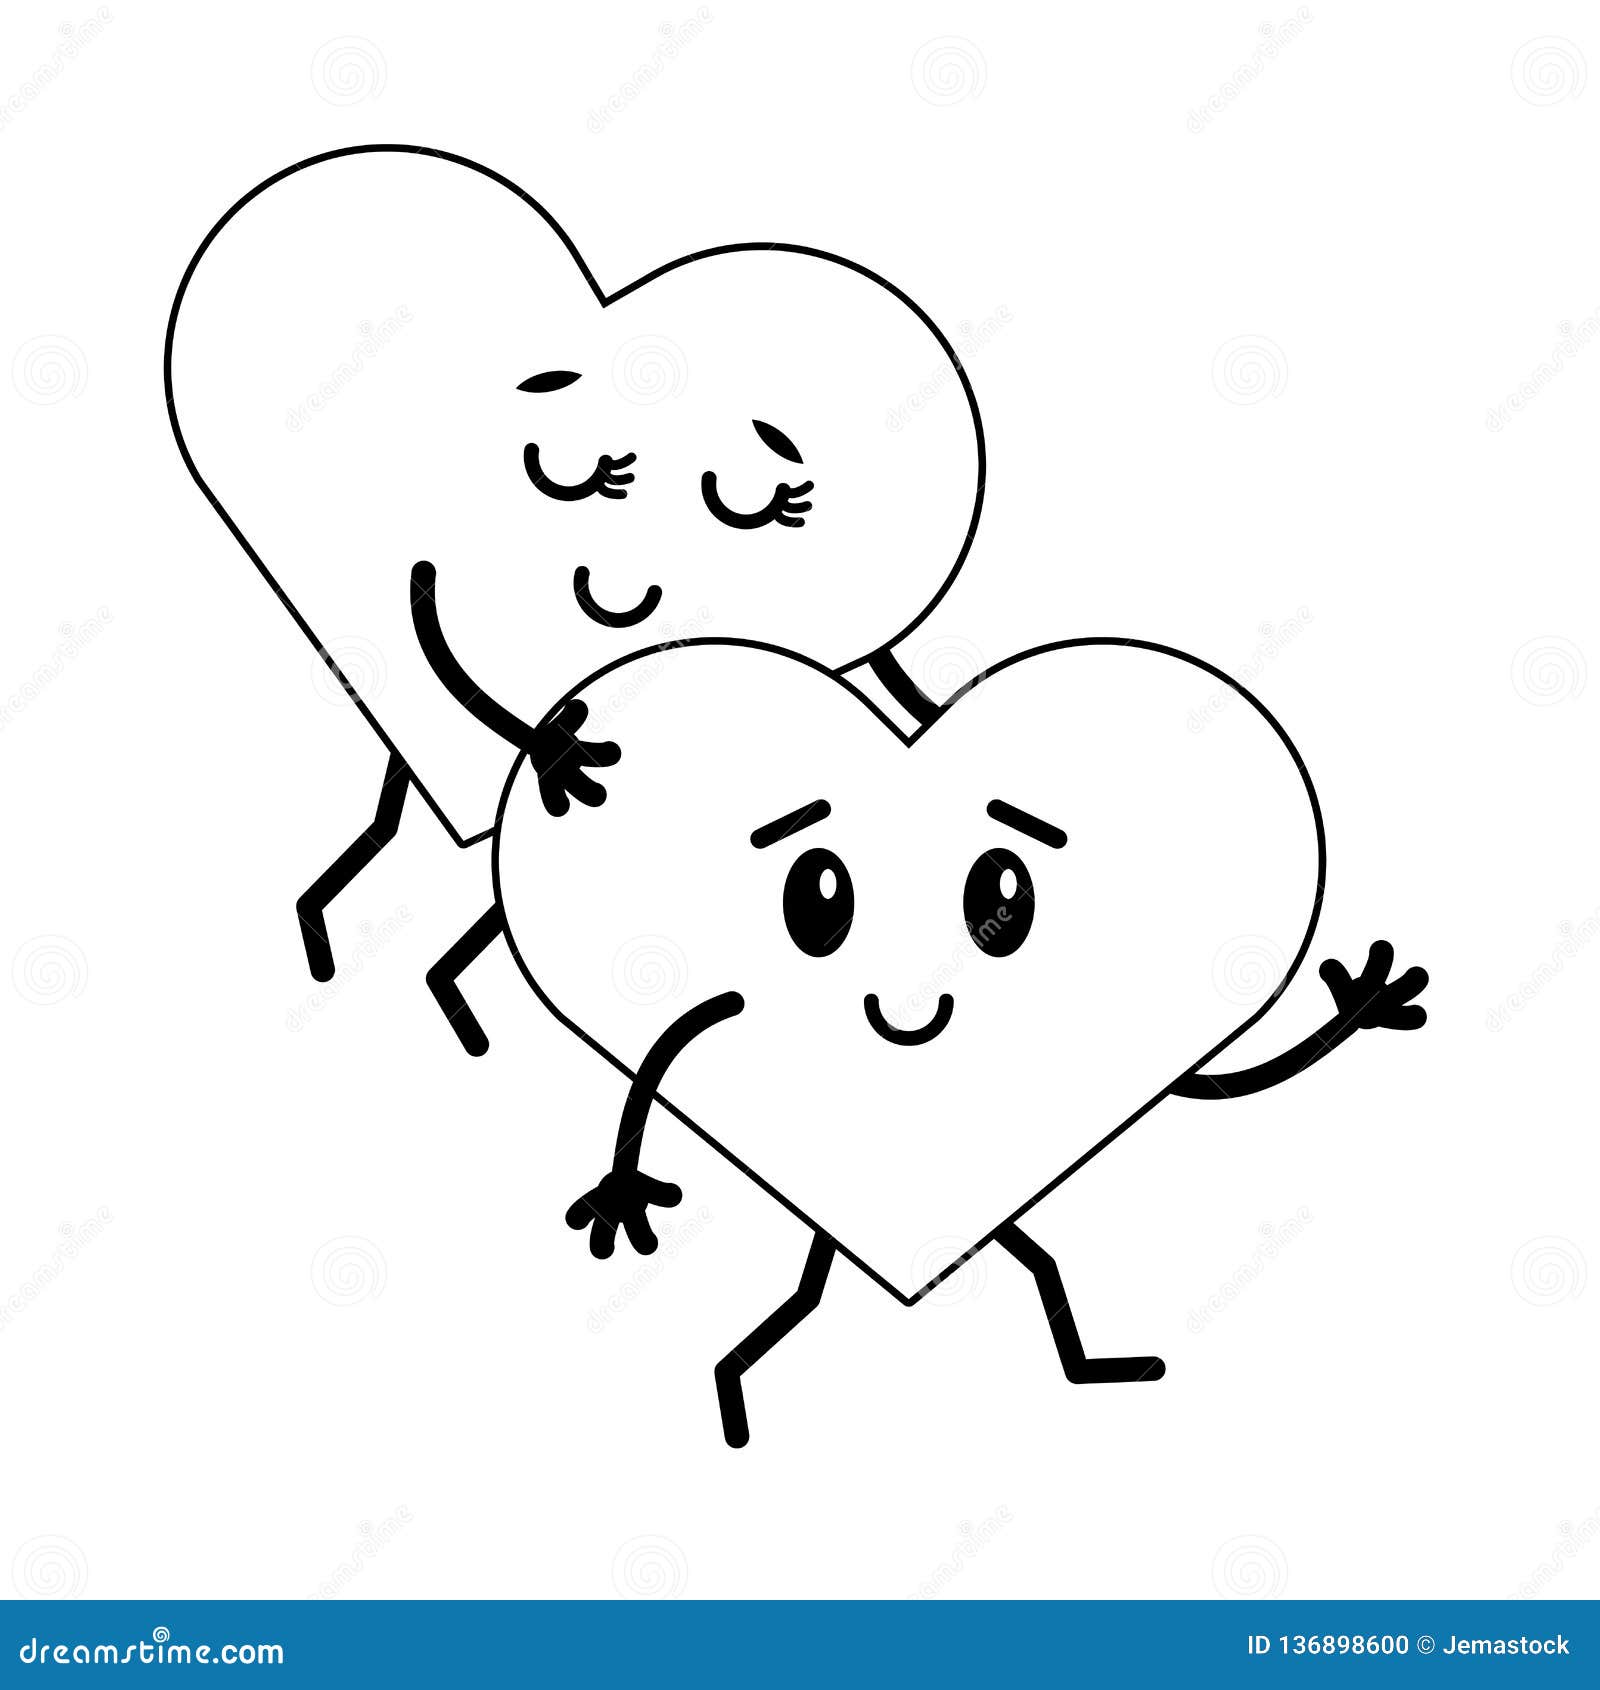 Cute Hearts in Love Cartoons Stock Vector - Illustration of decoration,  eyes: 136898600